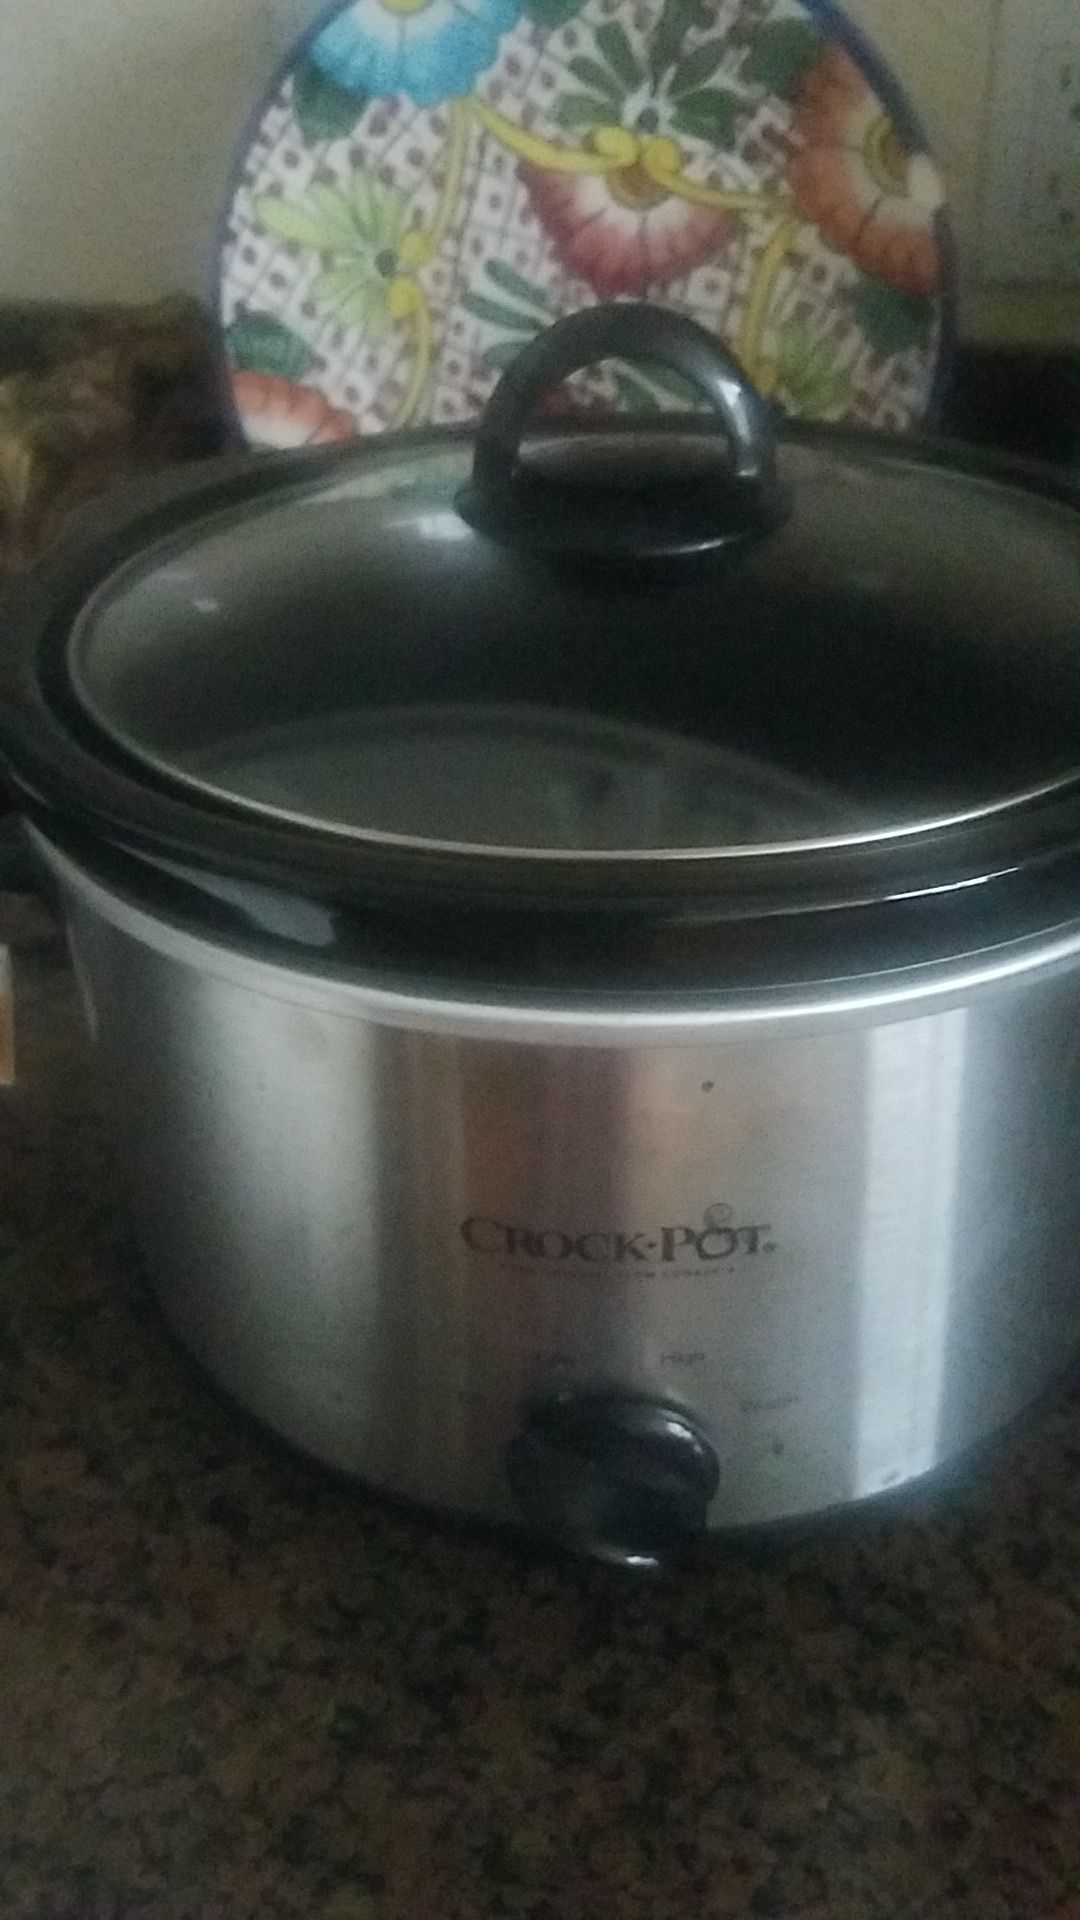 crock pot hardly used 4 quarts